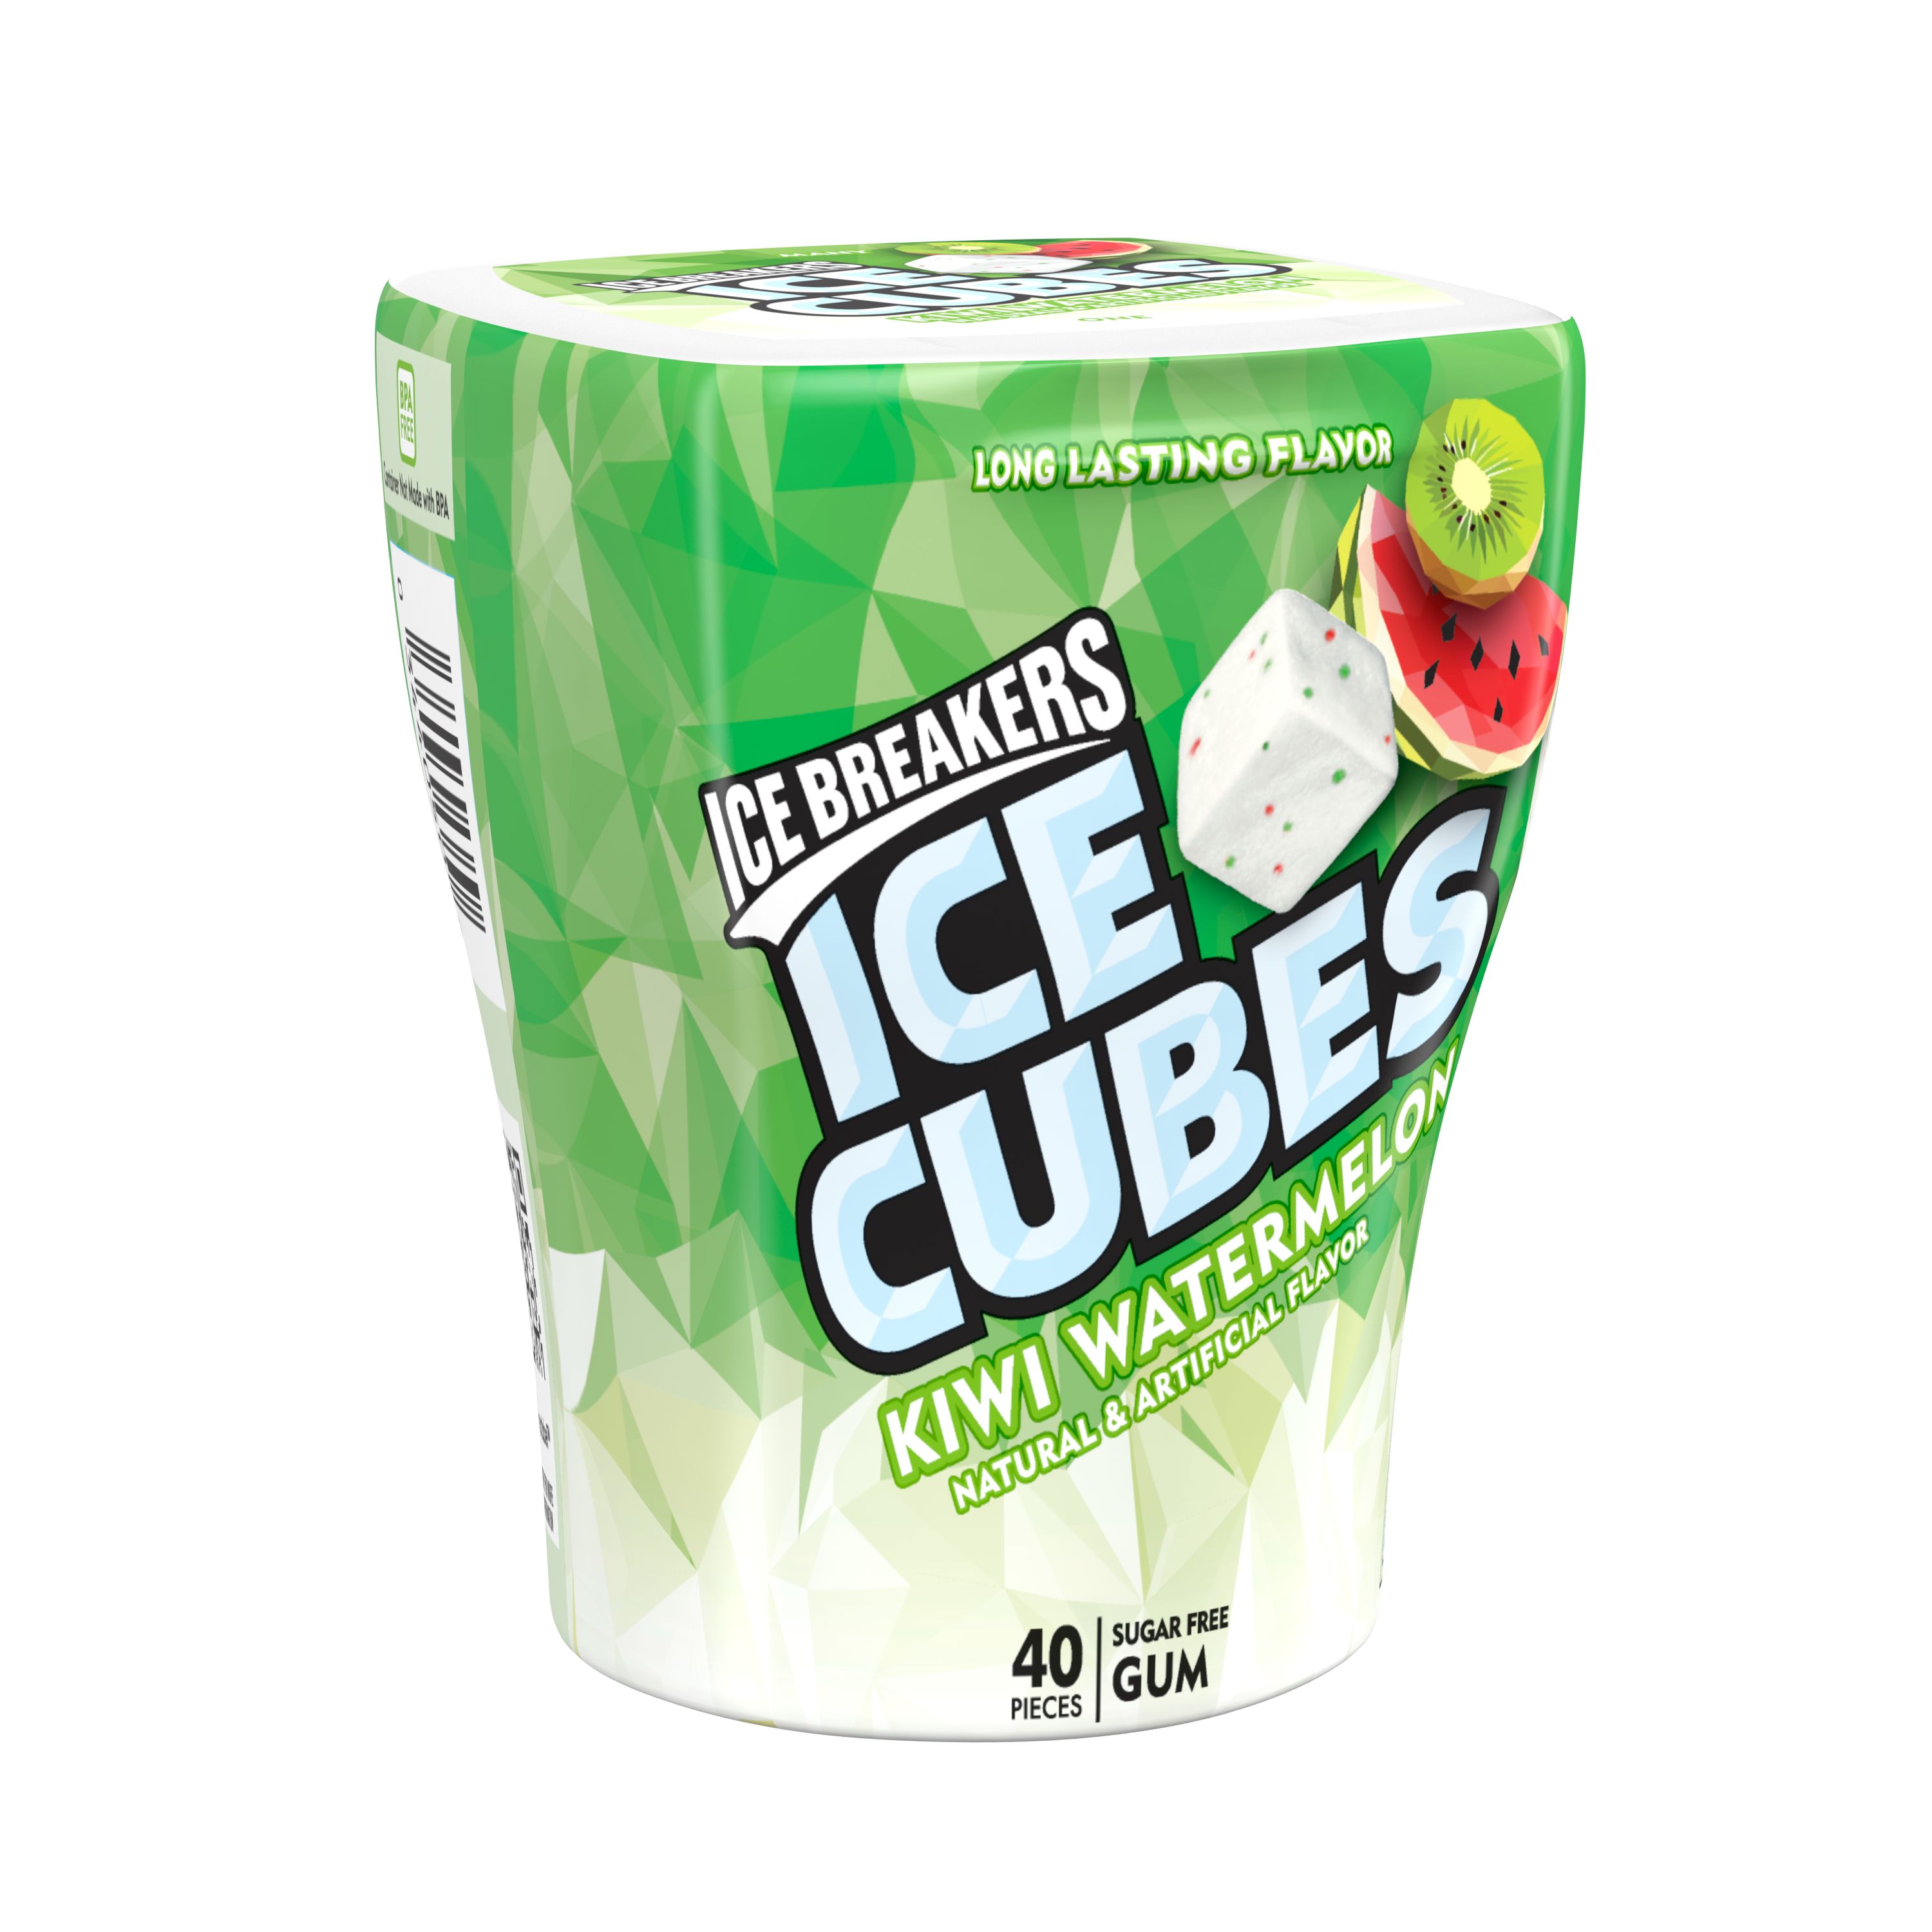 Ice Breakers Ice Cubes - Chicles sin azúcar, Kiwi Watermelon, 3.24 oz